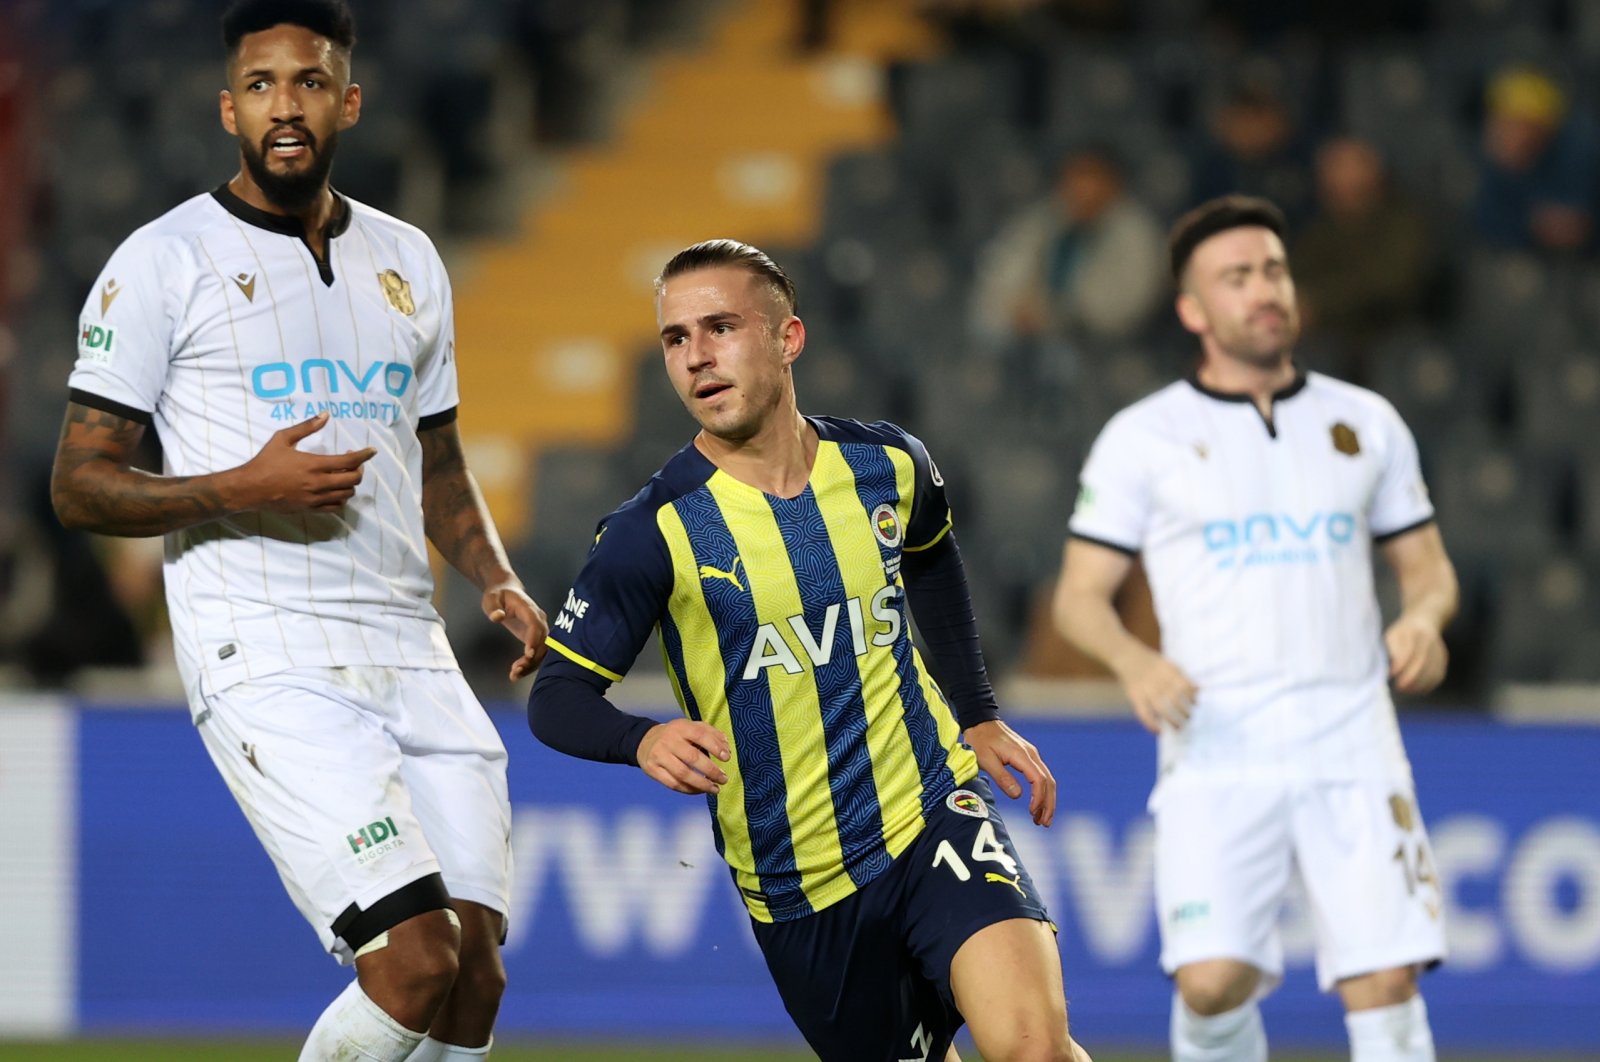 Fenerbahçe&#039;s Dimitris Pelkas (C) celebrates after scoring a goal in a Süper Lig match against Yeni Malatyaspor, Istanbul, Turkey, Dec. 26, 2021.